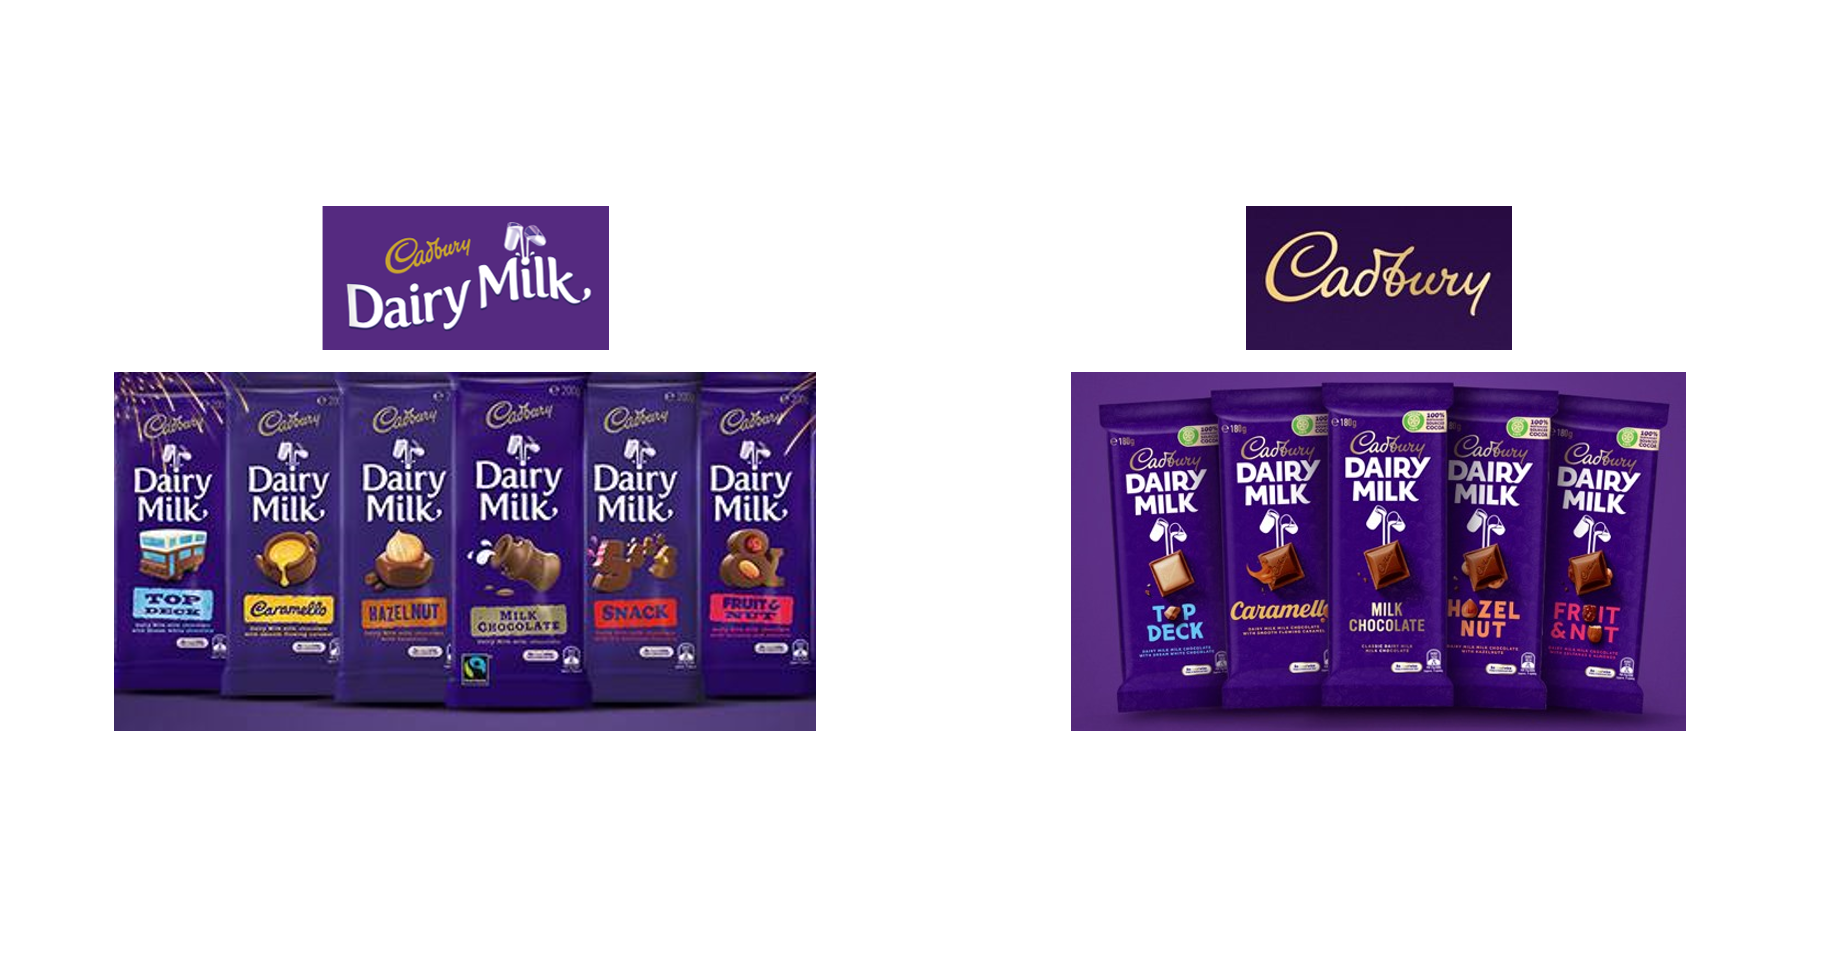 Cadbury's dairy milk chocolate - fans claim recipe has changed Bournville |  UK | News | Express.co.uk